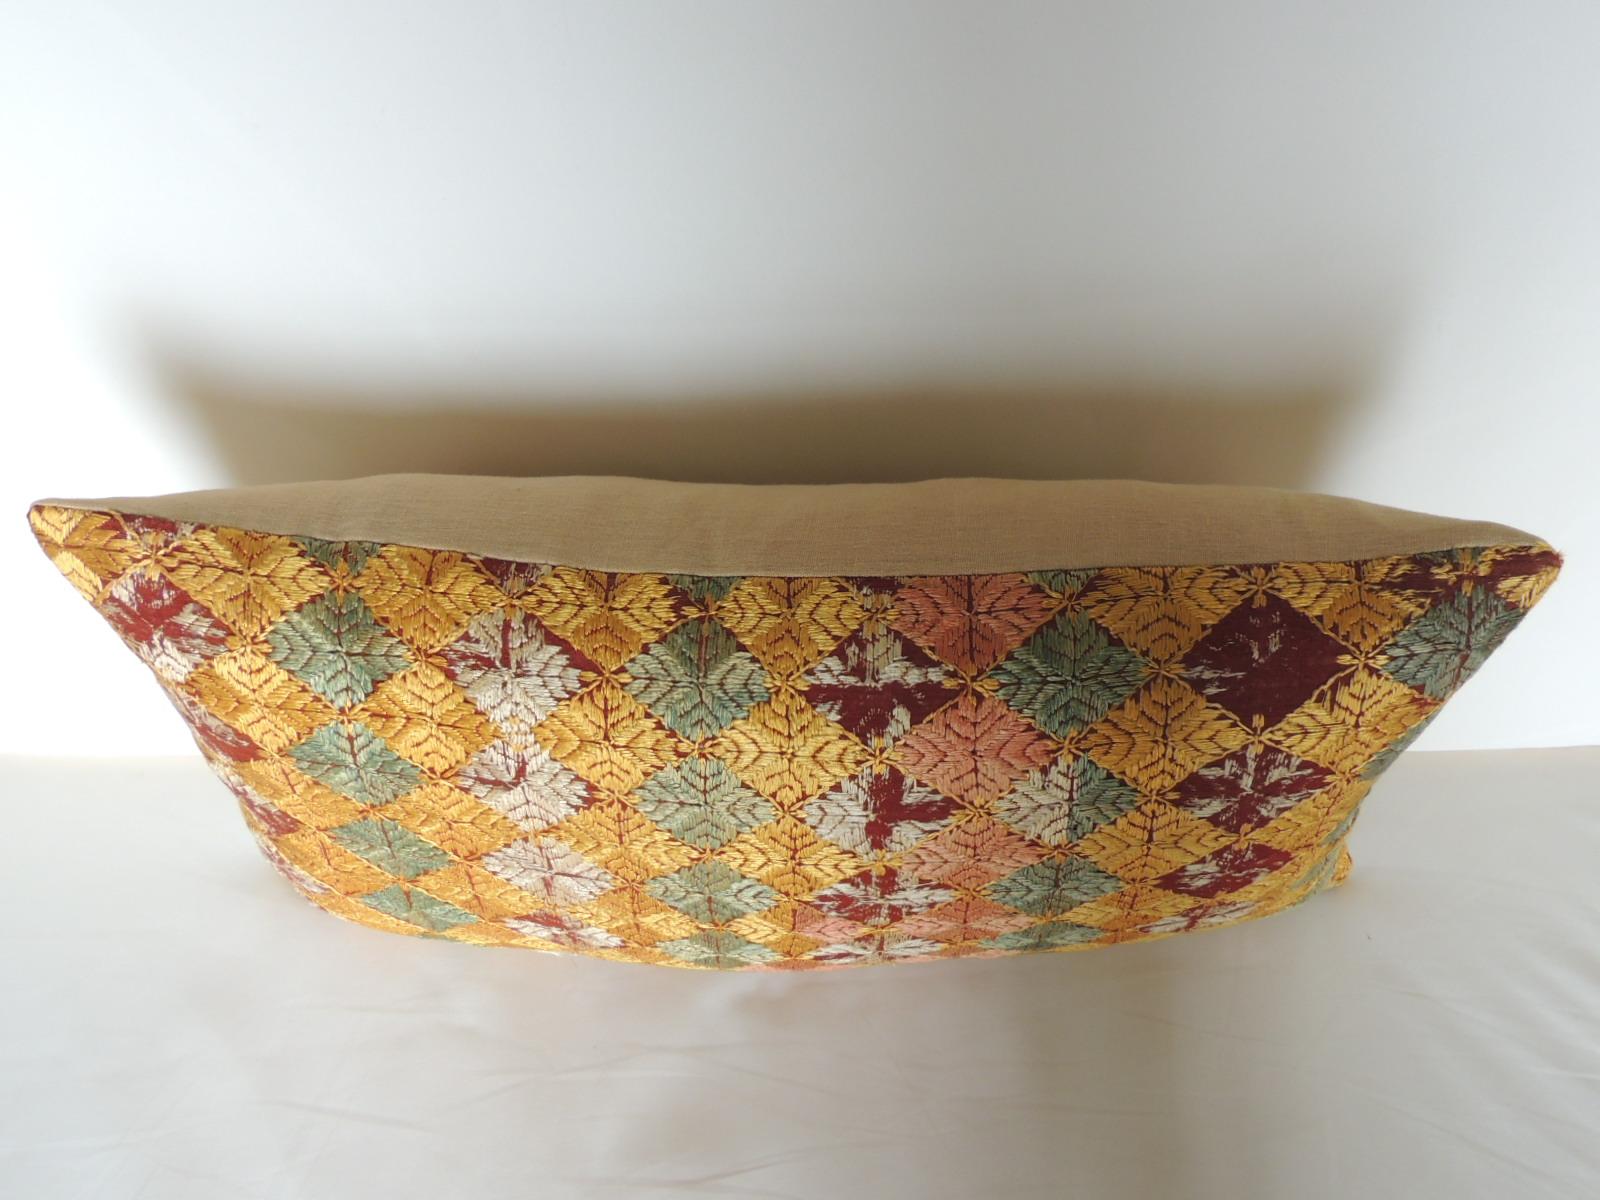 Moorish Woven Yellow and Green “Phulkari” Artisanal Decorative Bolster Pillow